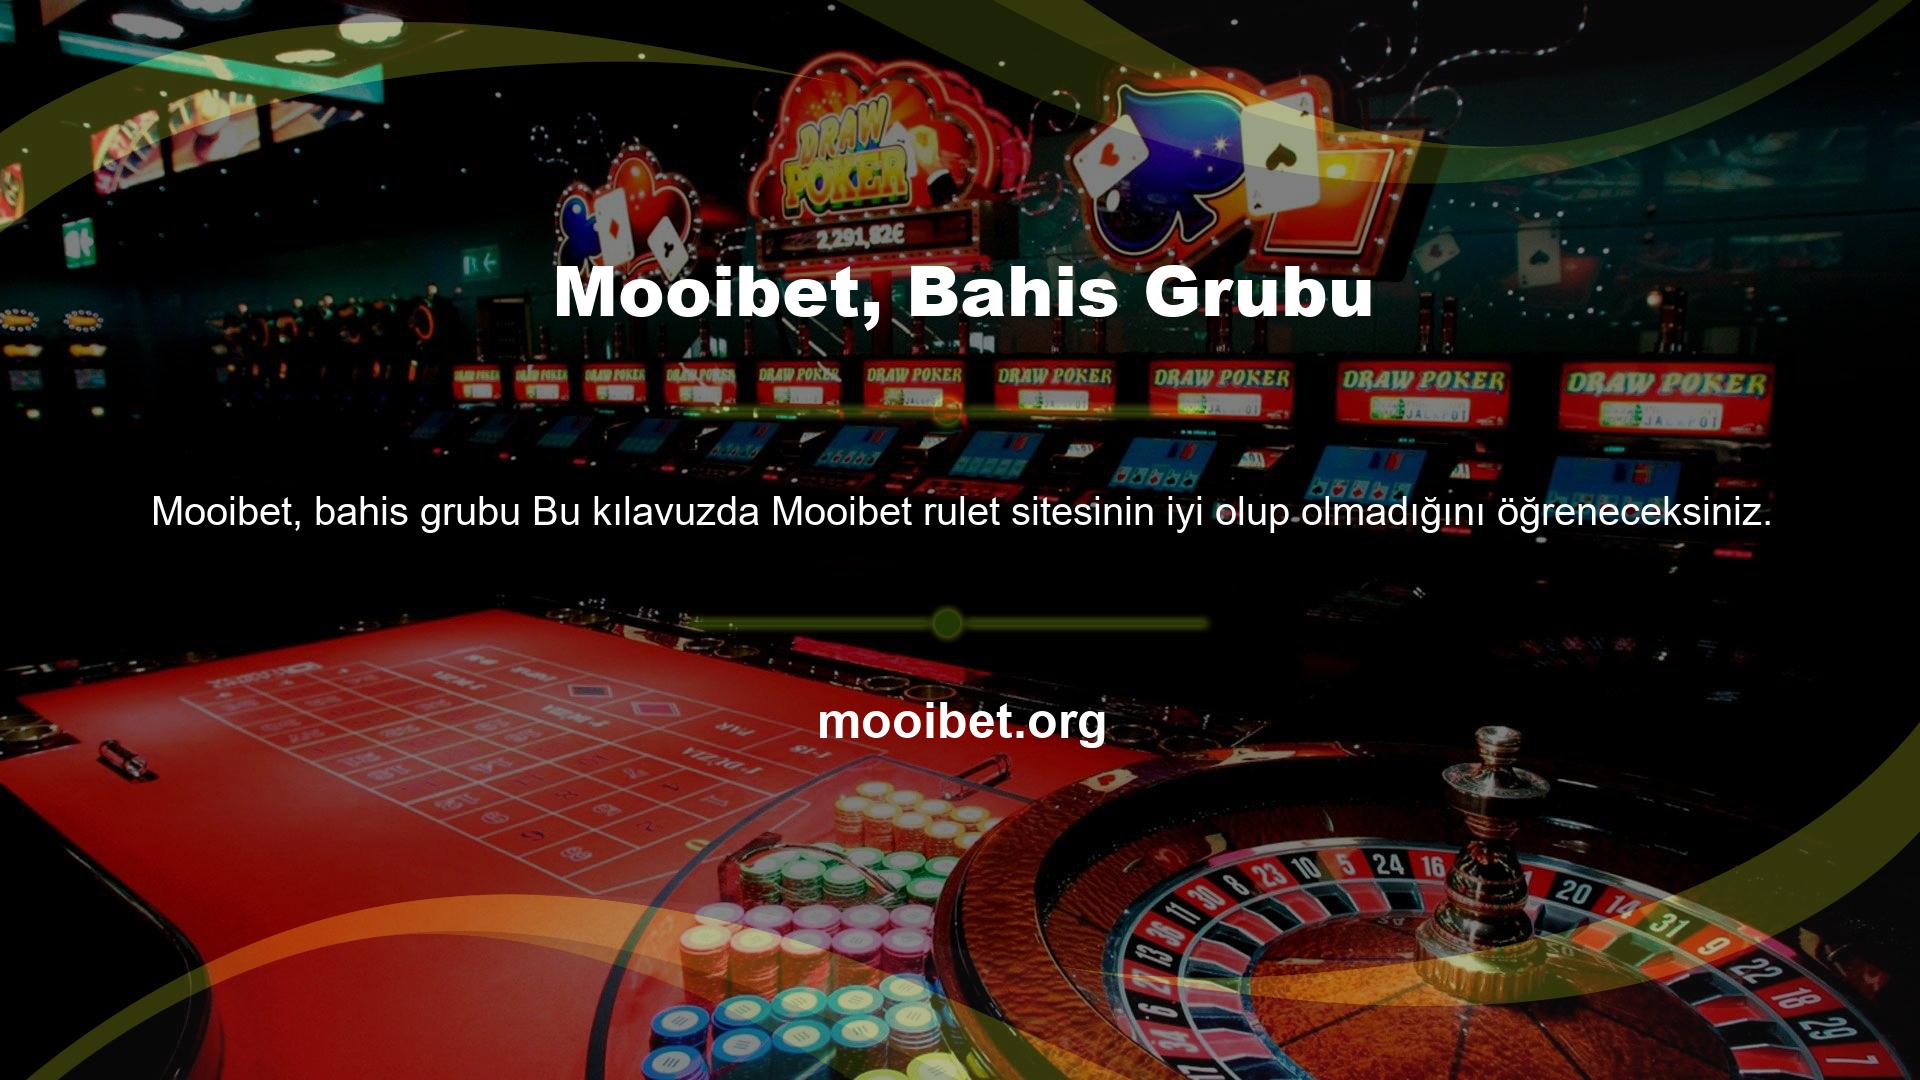 Mooibet Bahis Grubu